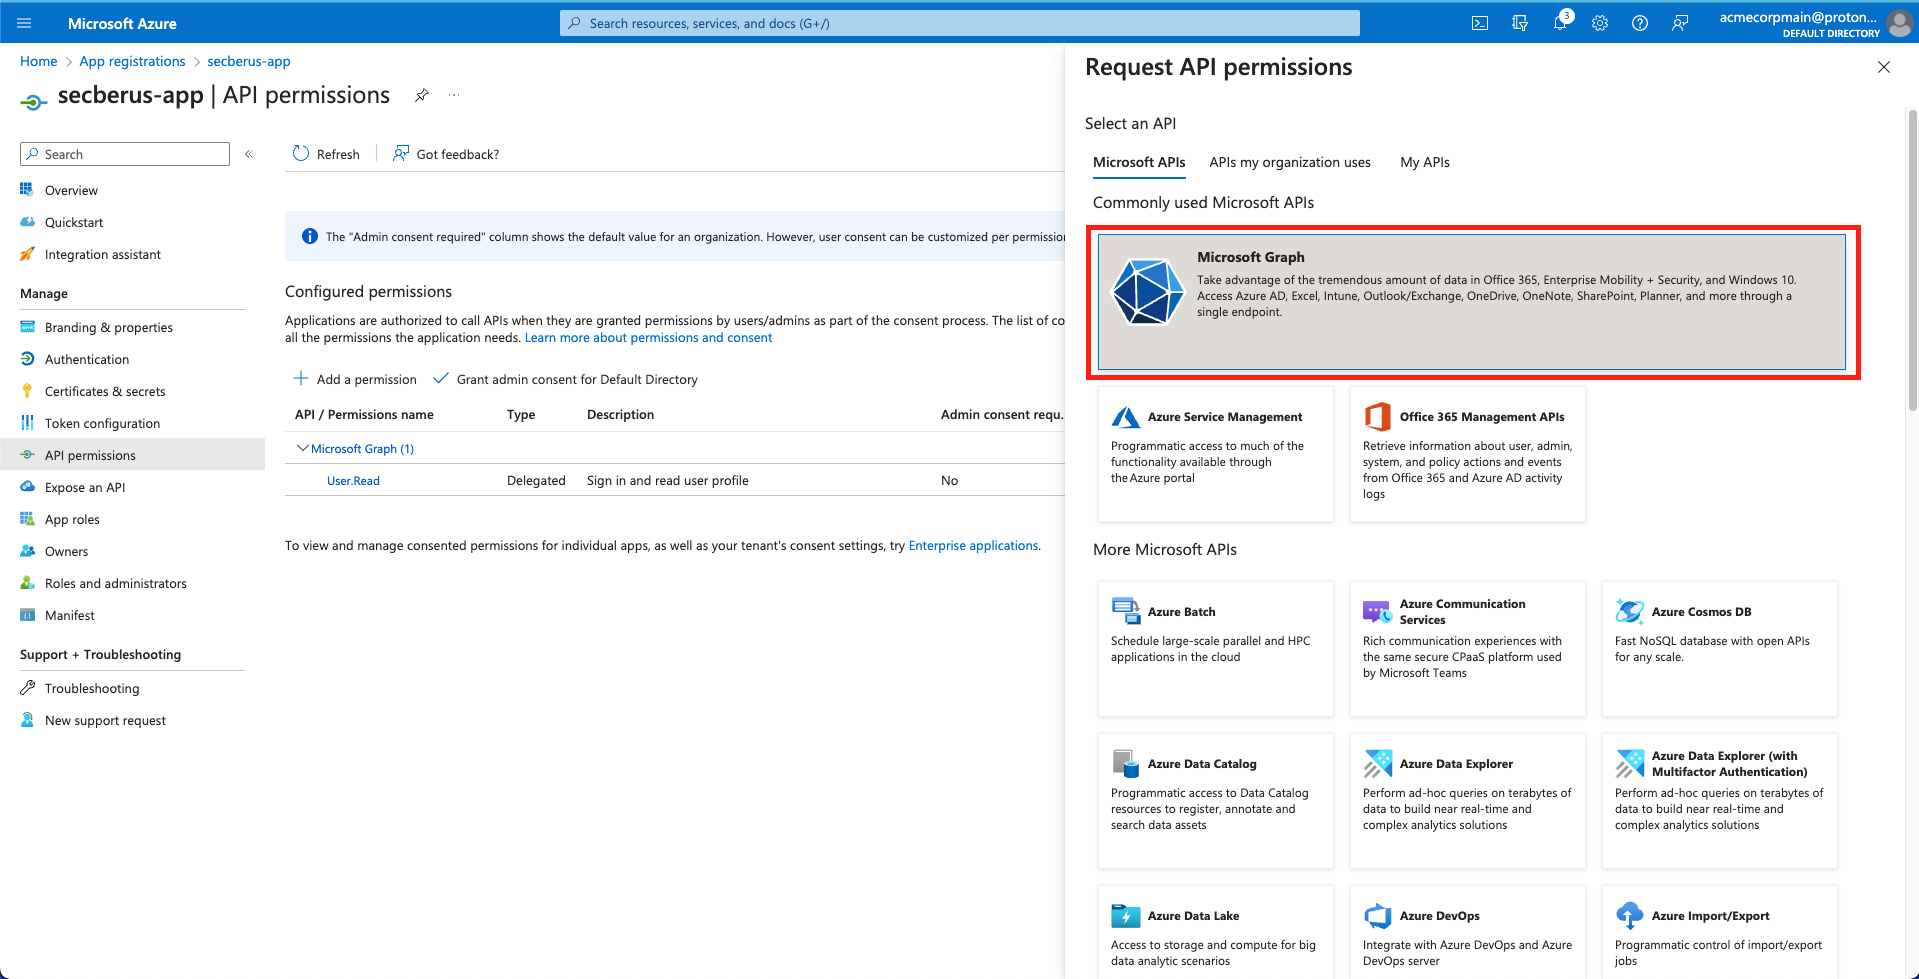 Select 'Microsoft Graph' under 'Request API permissions'